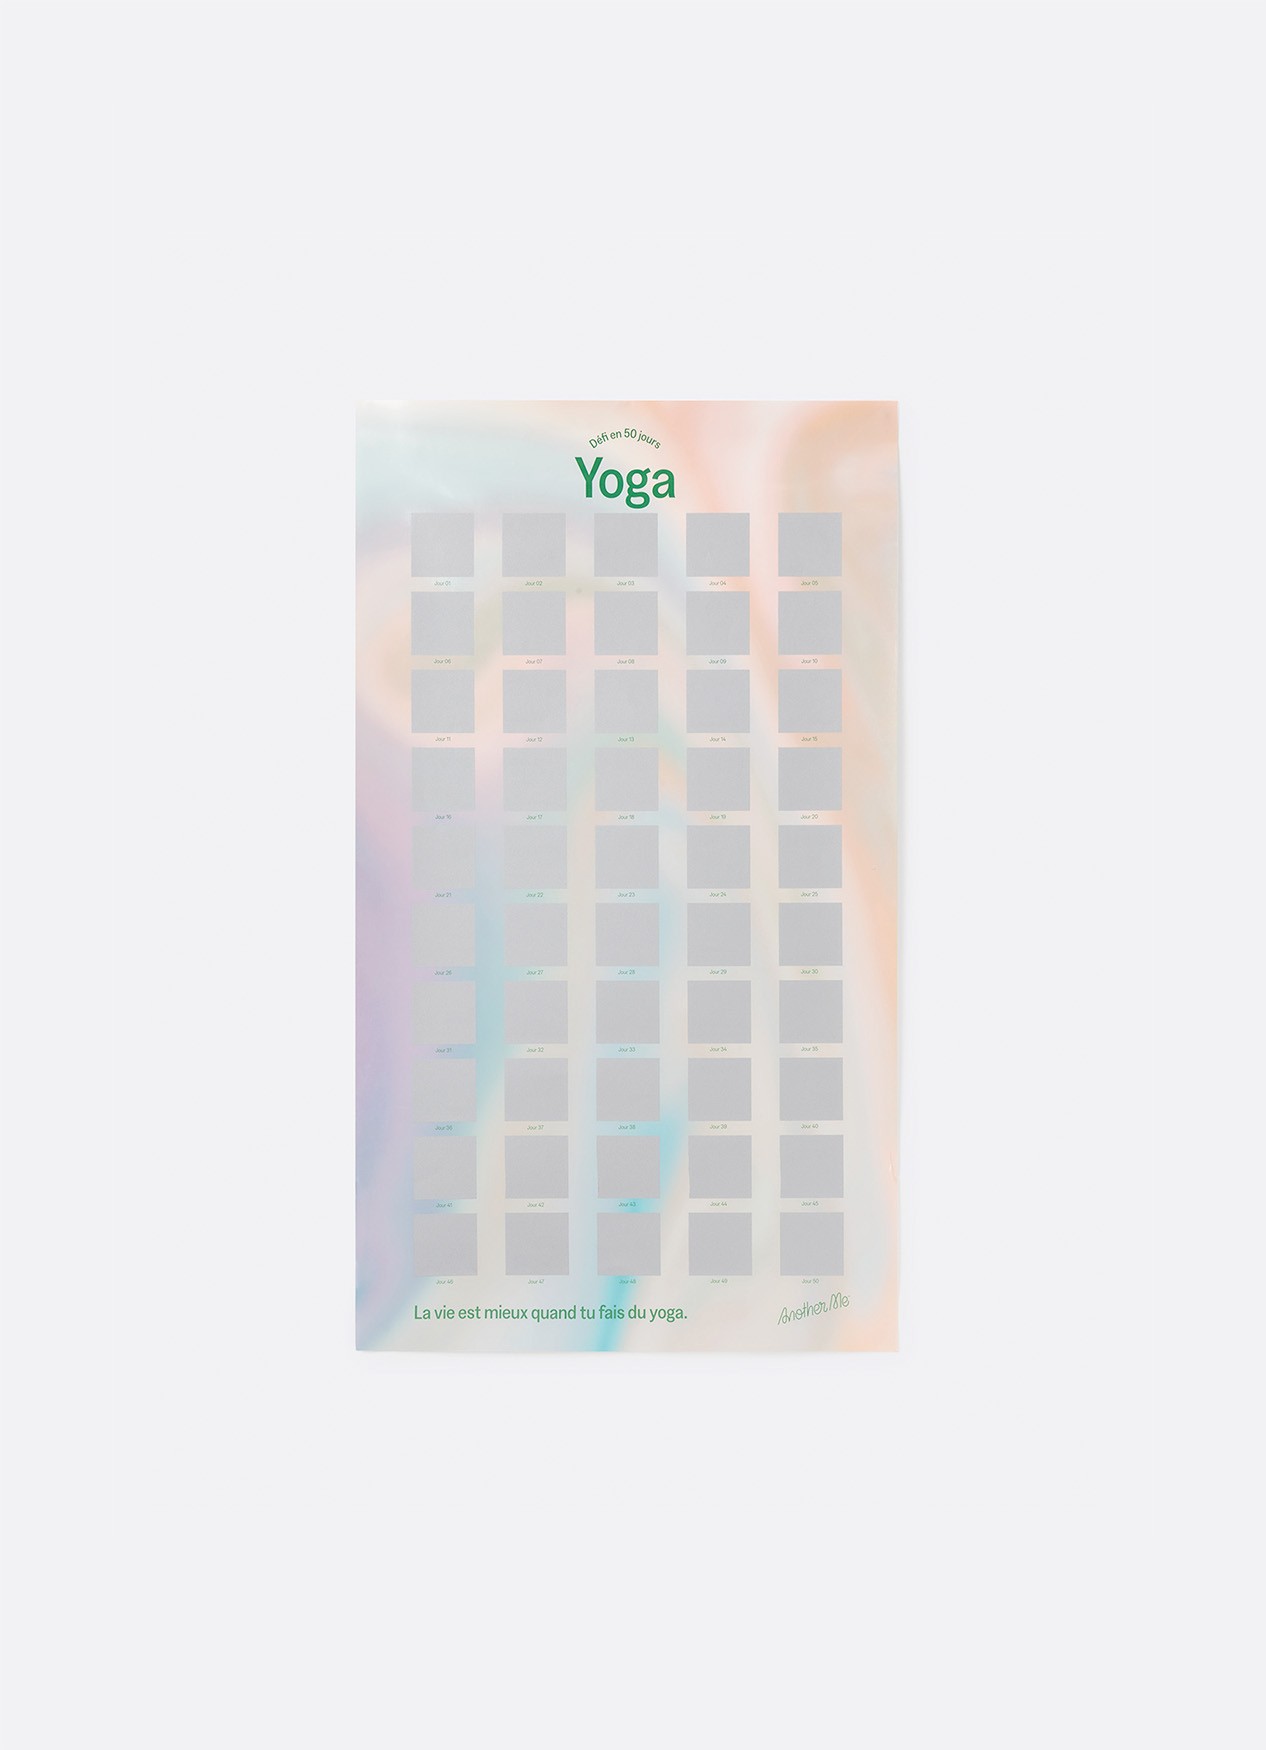 Another me Poster Challenge Yoga En 50 Jours